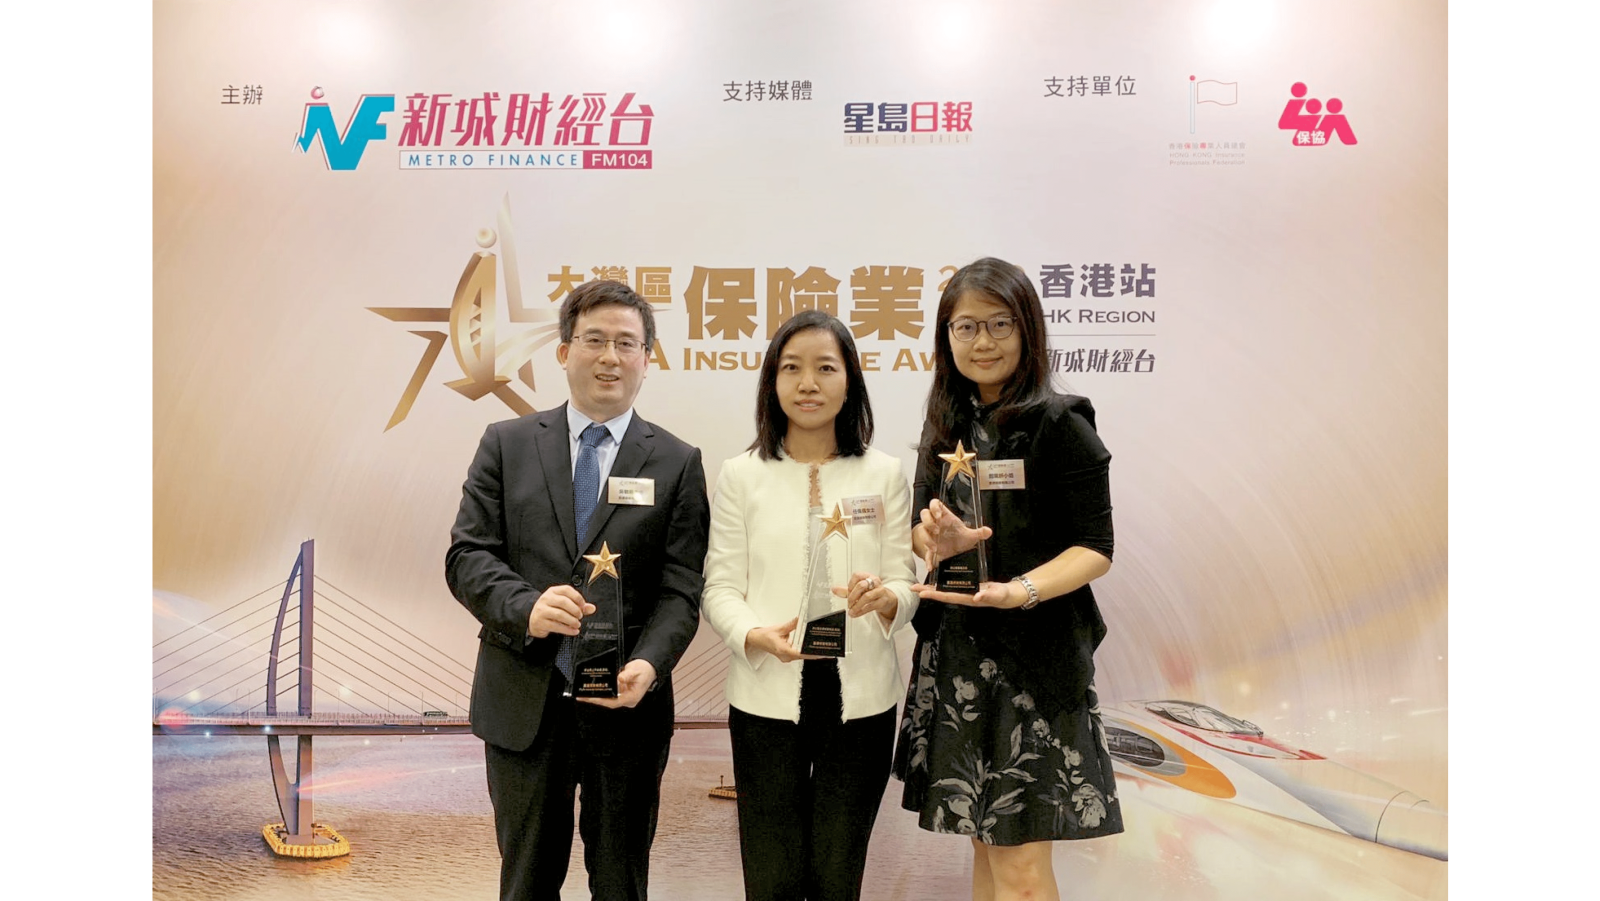 FTLife garnered 3 awards in Metro Finance “GBA Insurance Awards 2019 – Hong Kong Region”